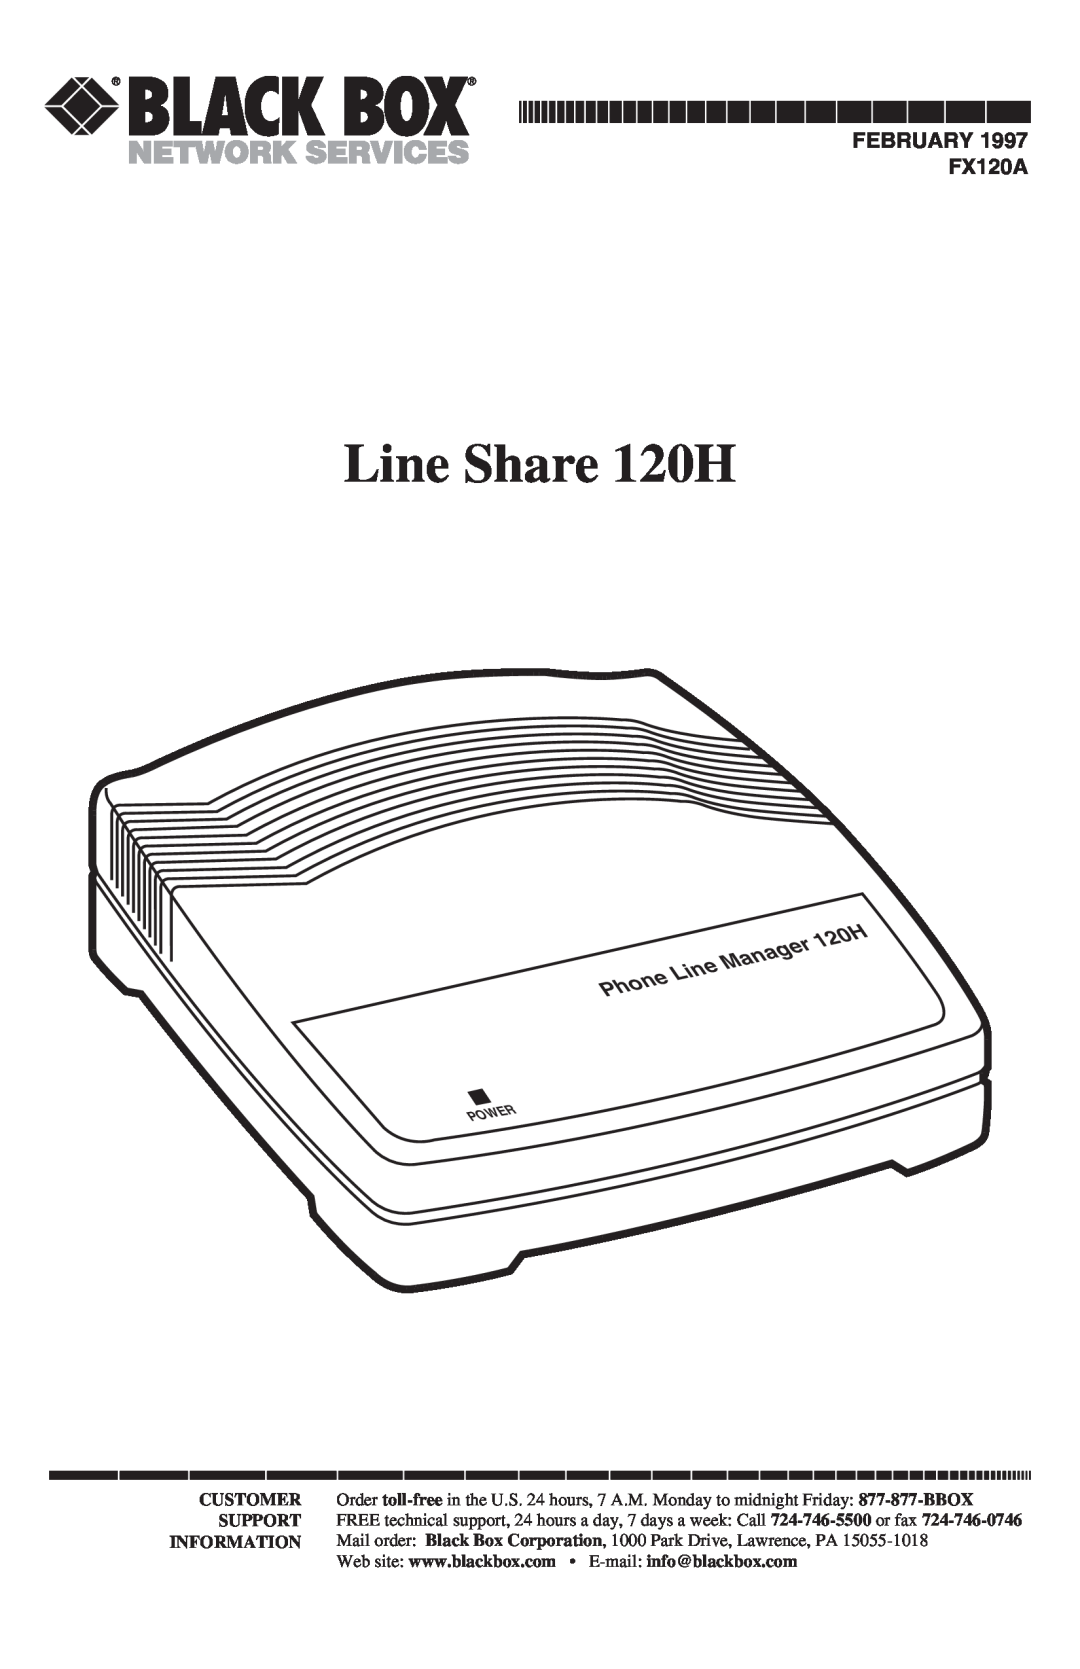 Black Box manual Line Share 120H, FEBRUARY FX120A 